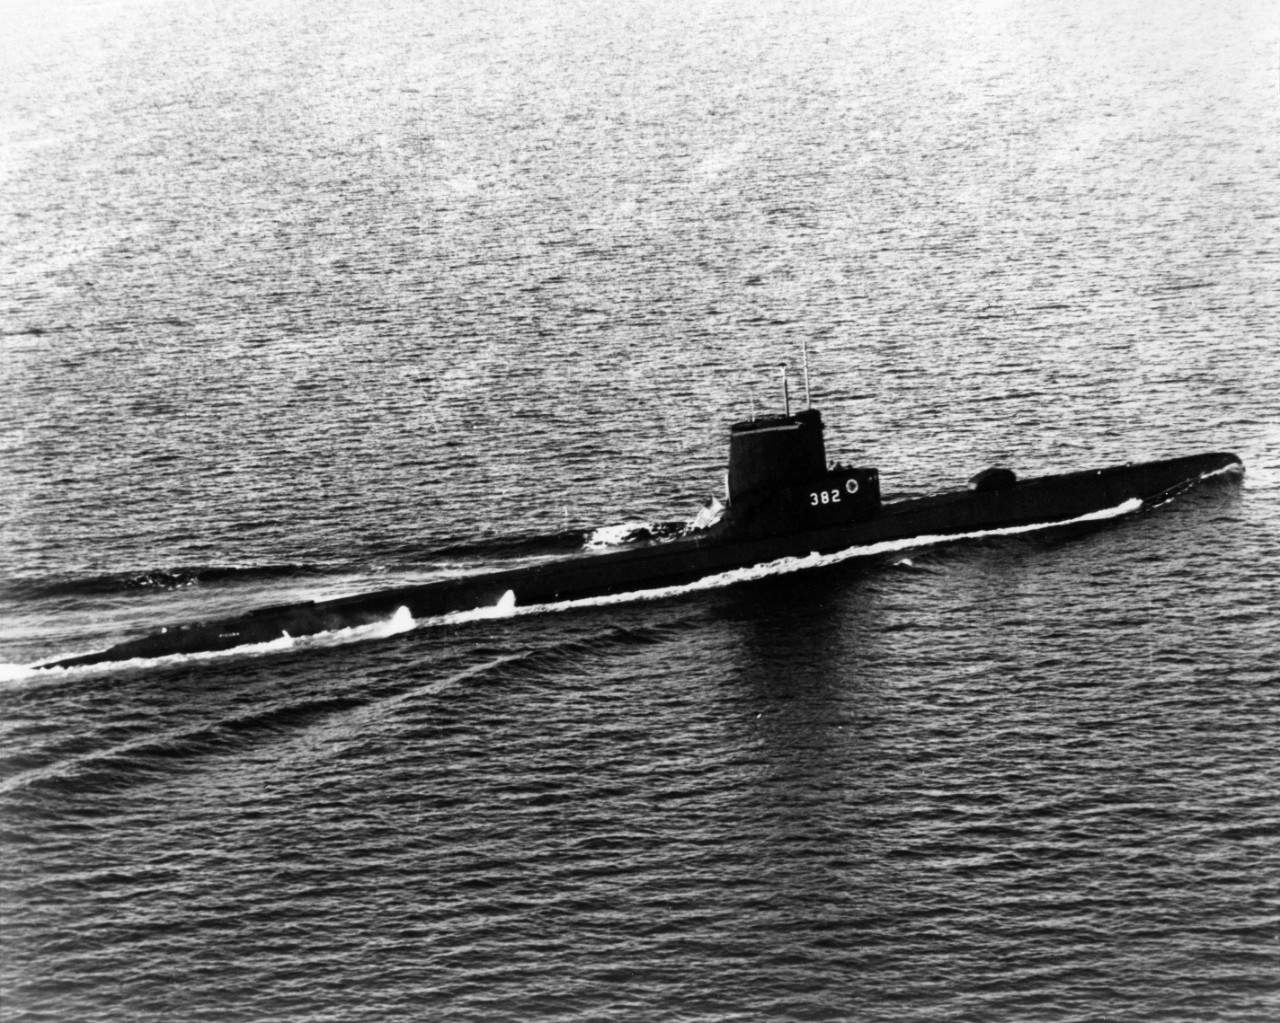 USS Picuda (SS-382)